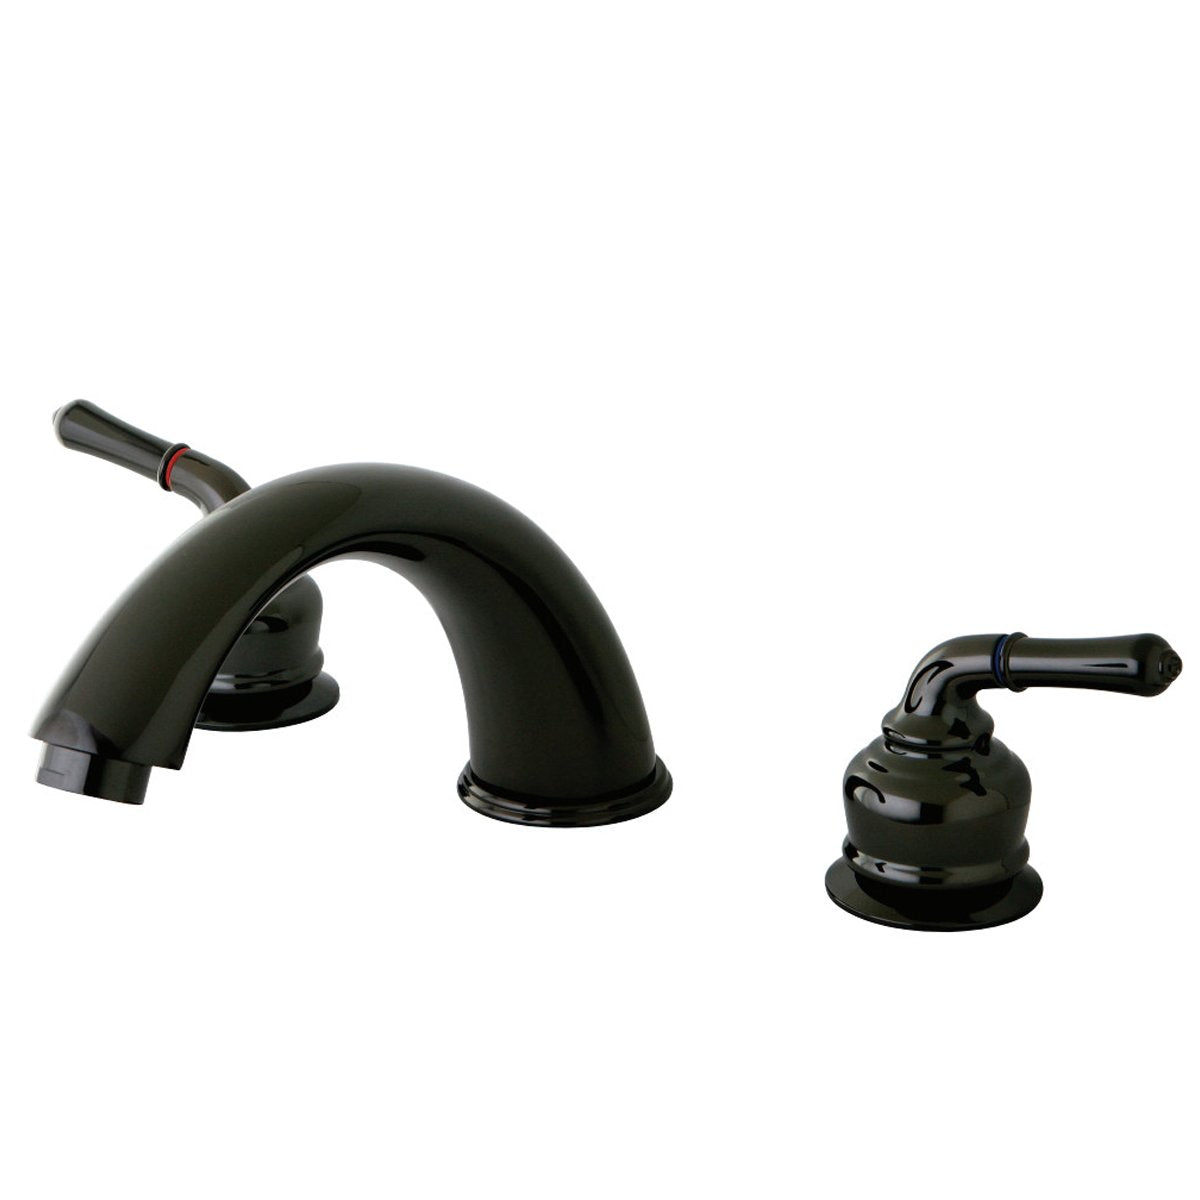 Kingston Brass Water Onyx Roman Tub Faucet in Black Stainless Steel